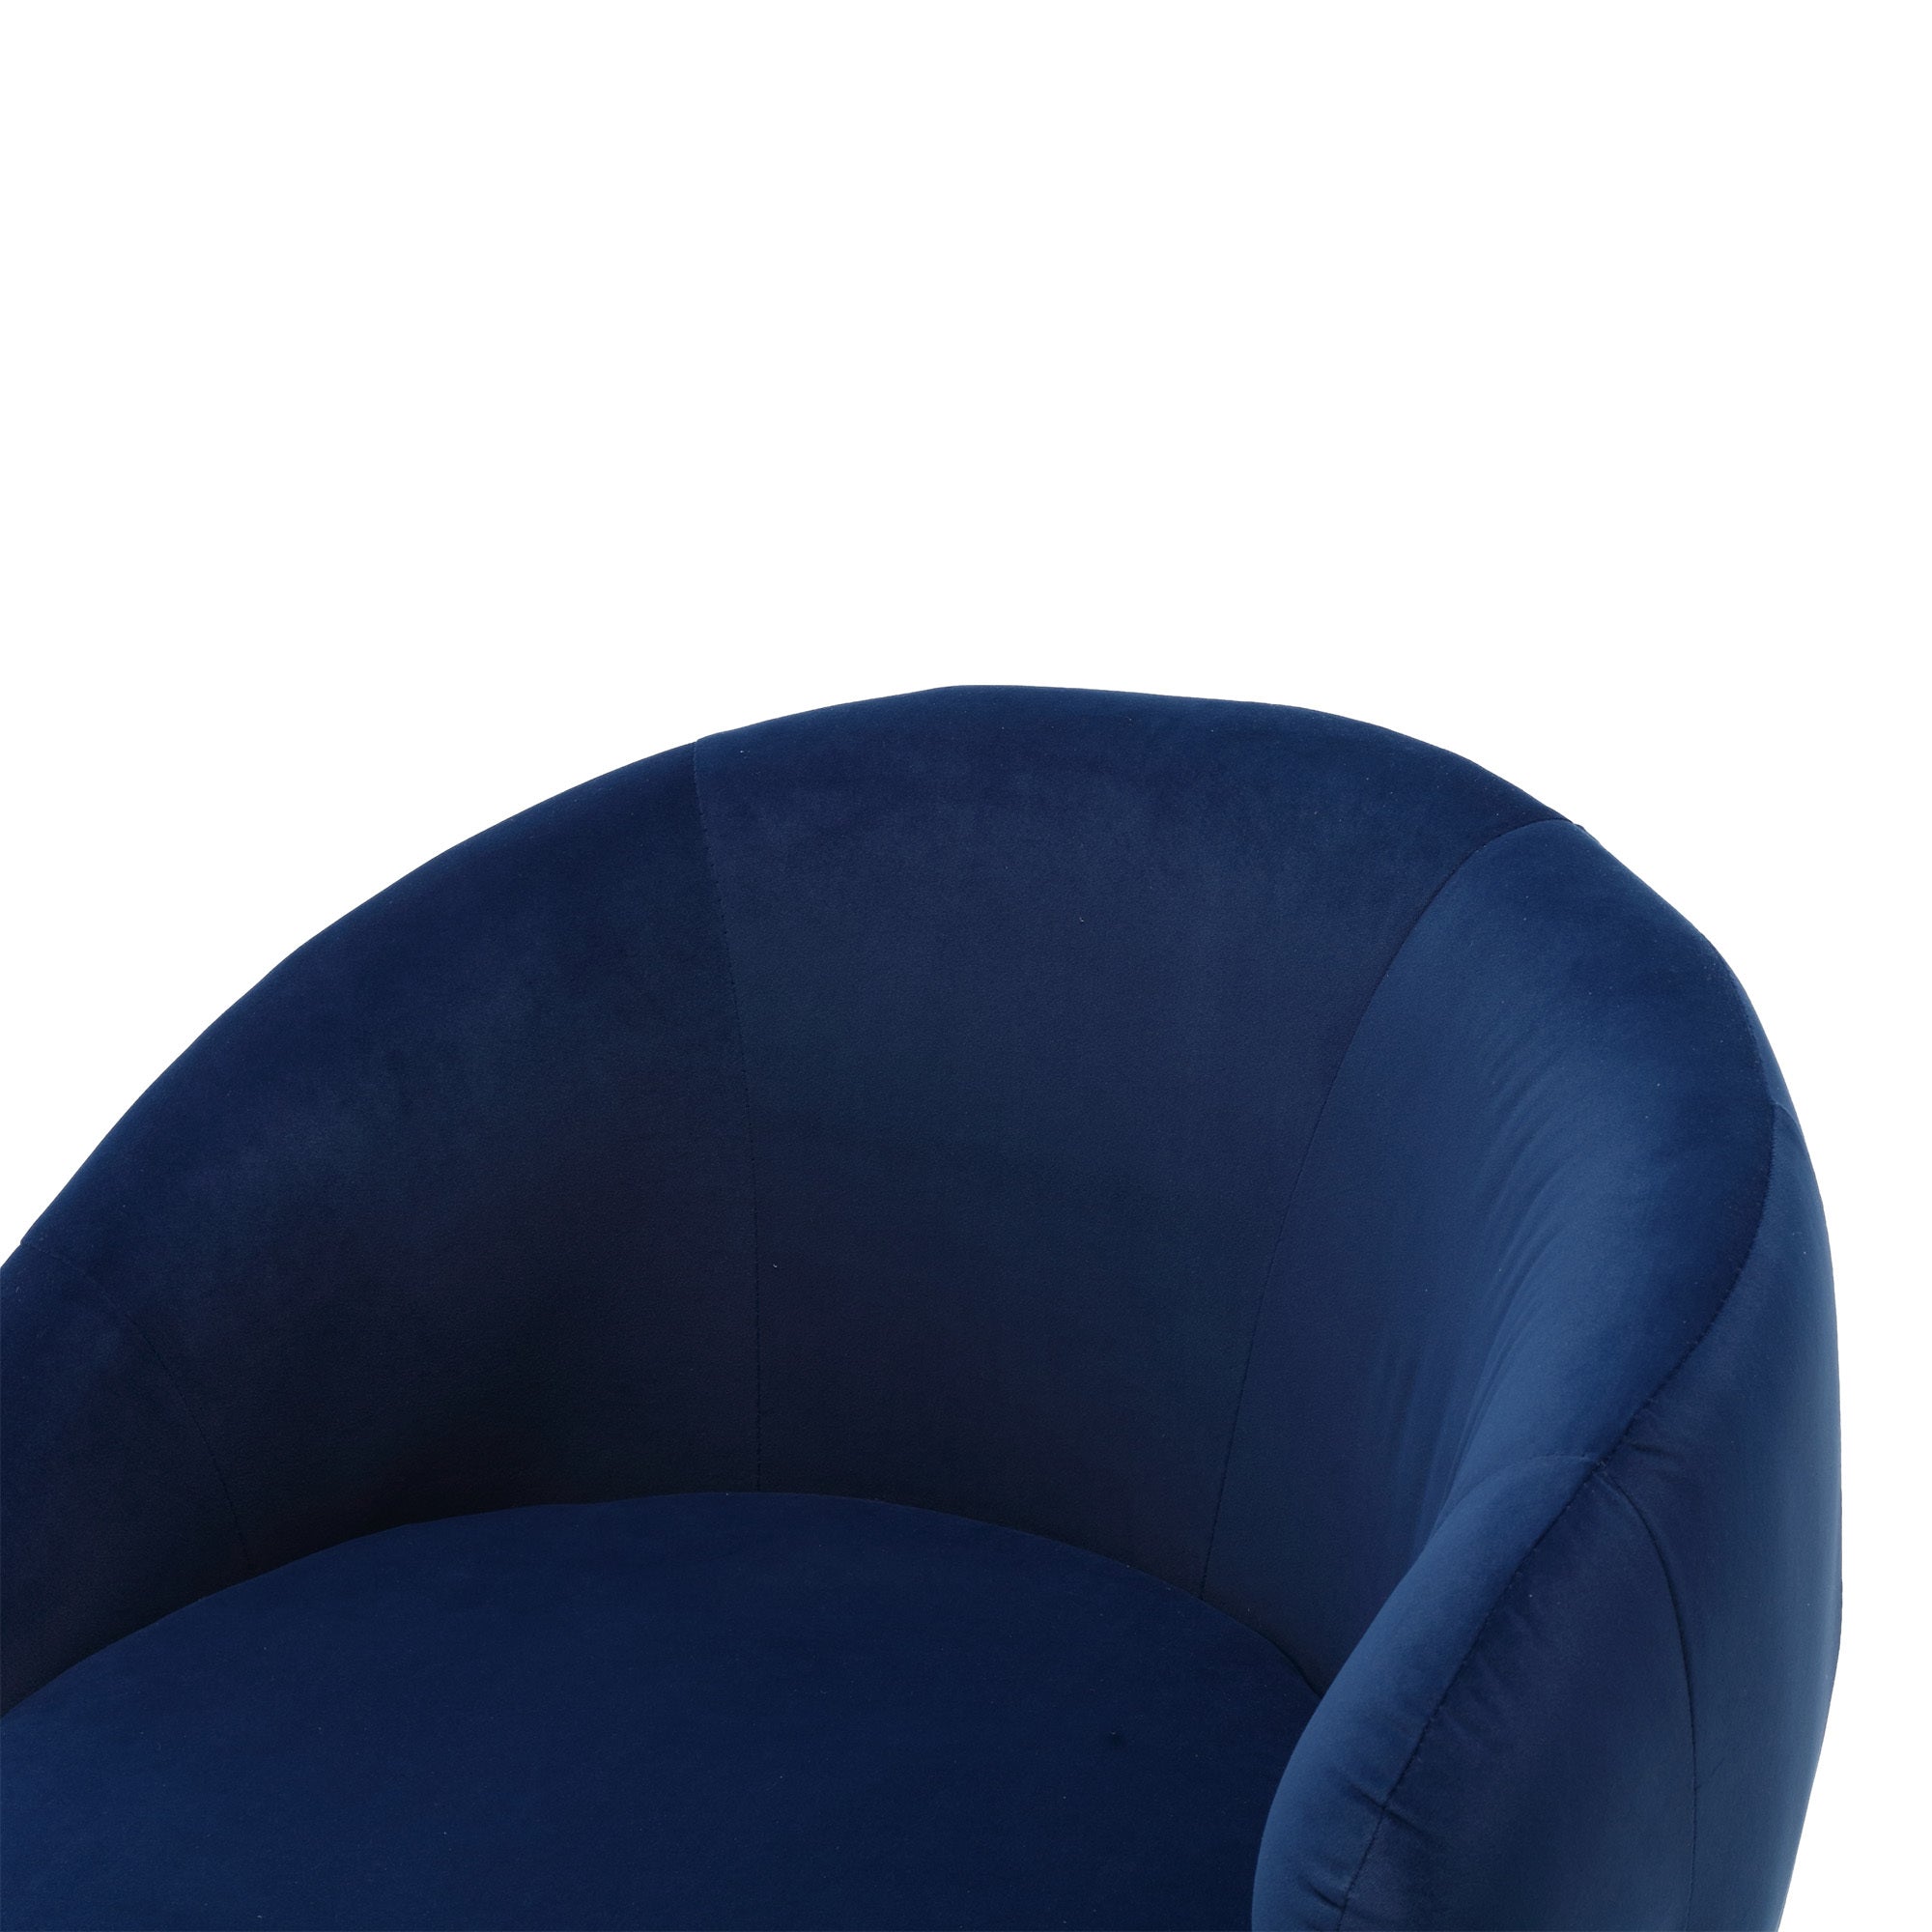 360 Degree Swivel Cuddle Barrel Accent Chairs, Round navy-velvet